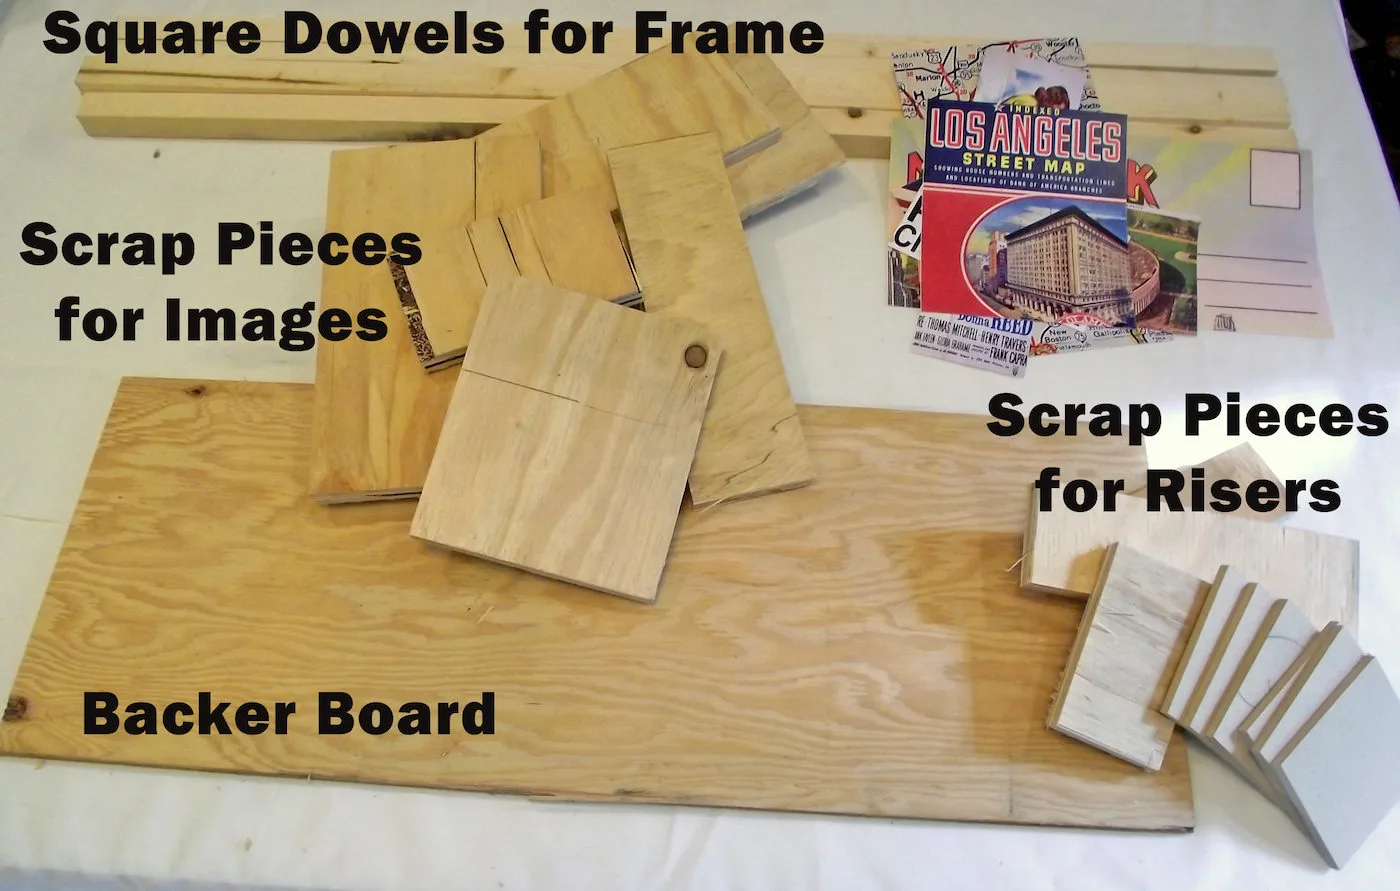 scrap wood, backer board, square dowels, and printed art